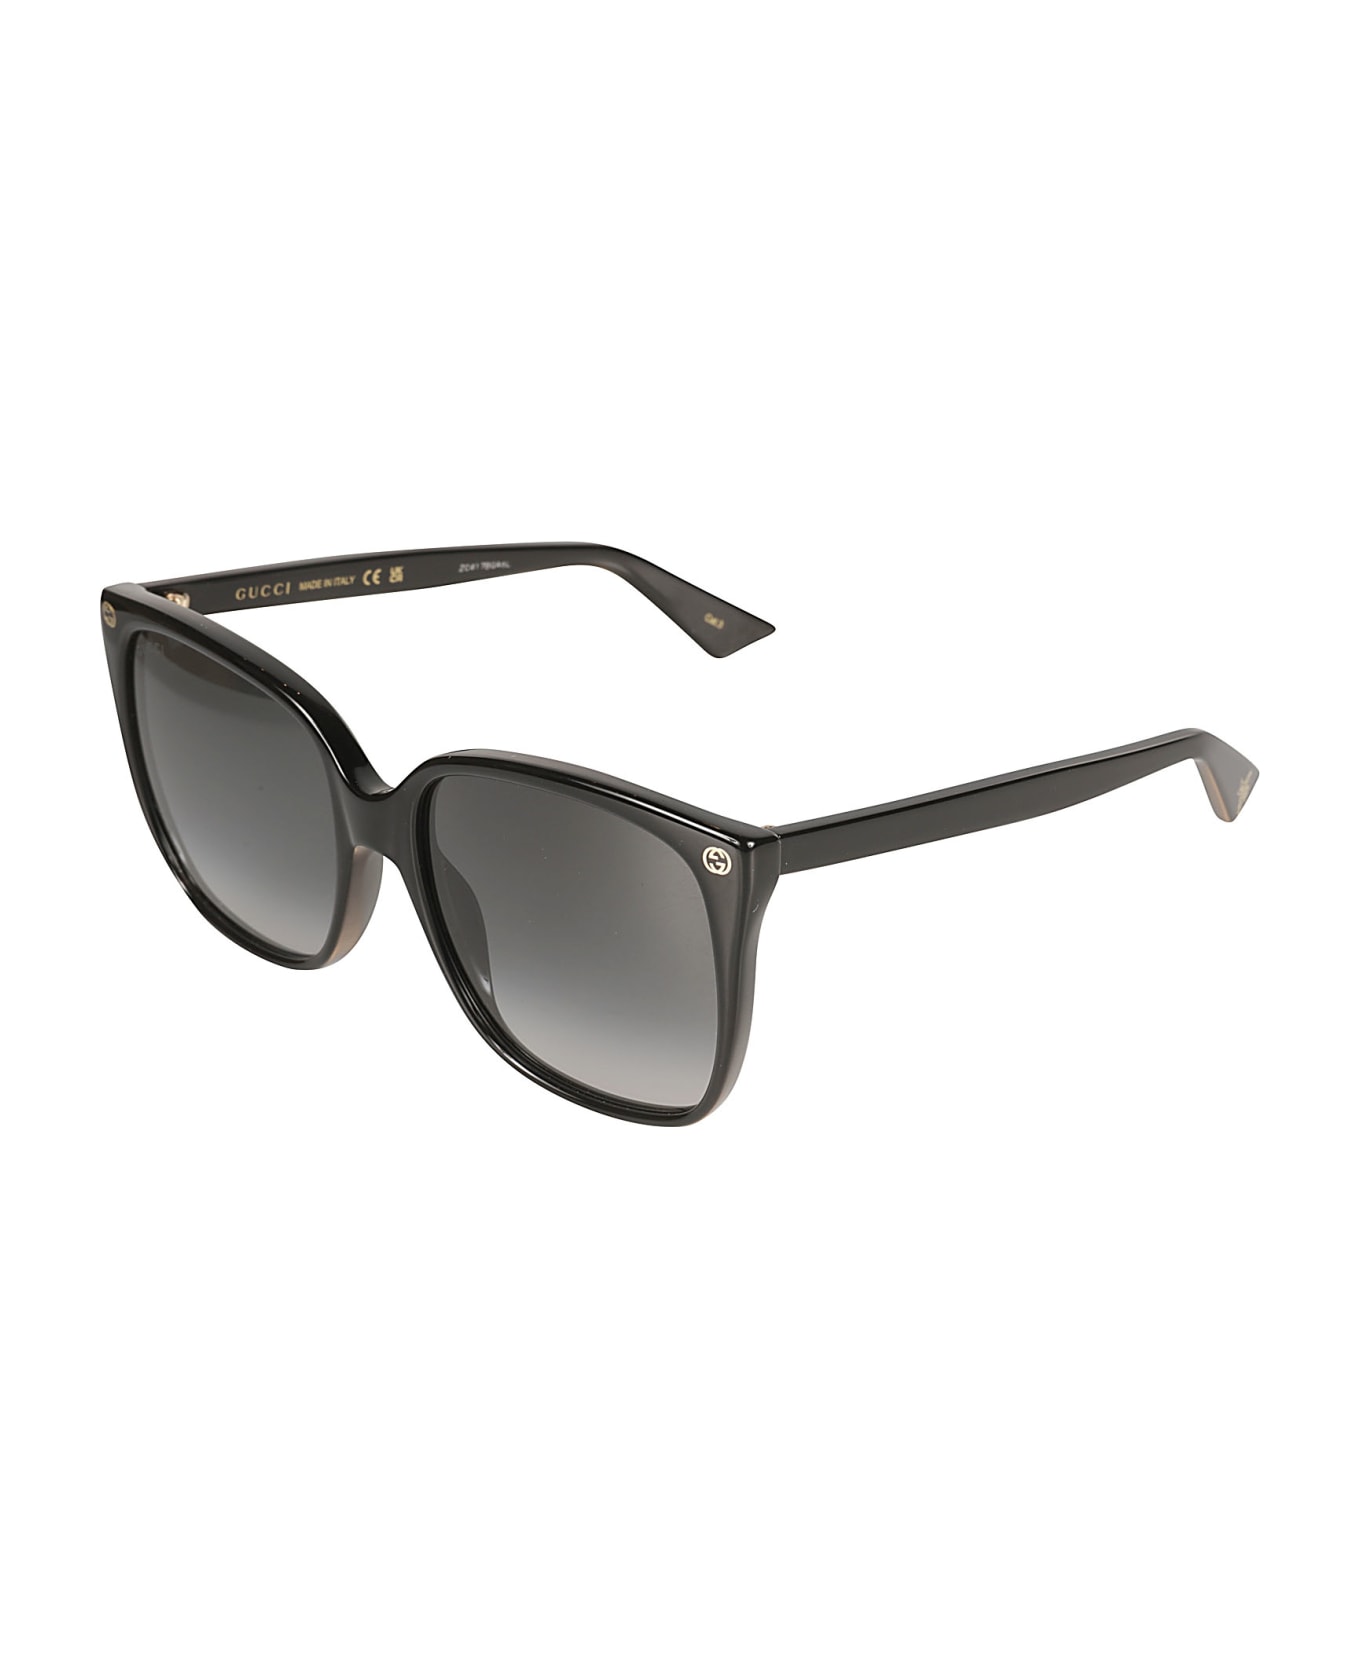 Gucci Eyewear Classic Square Frame Sunglasses - Black/Grey サングラス